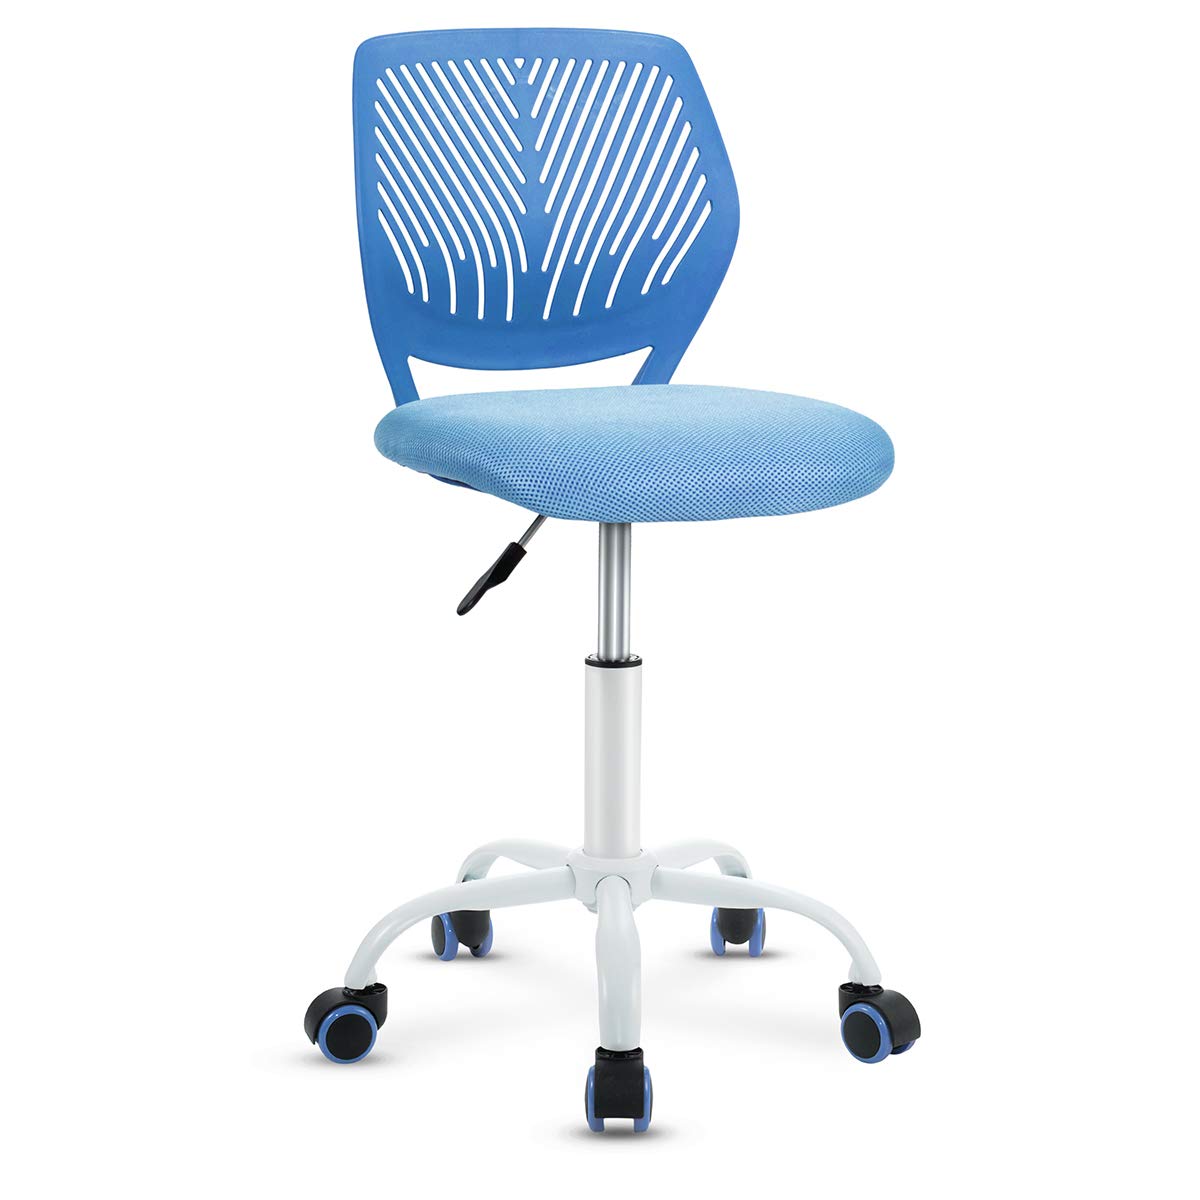 Giantex Kids Desk Chair, Adjustable Children Study Chair